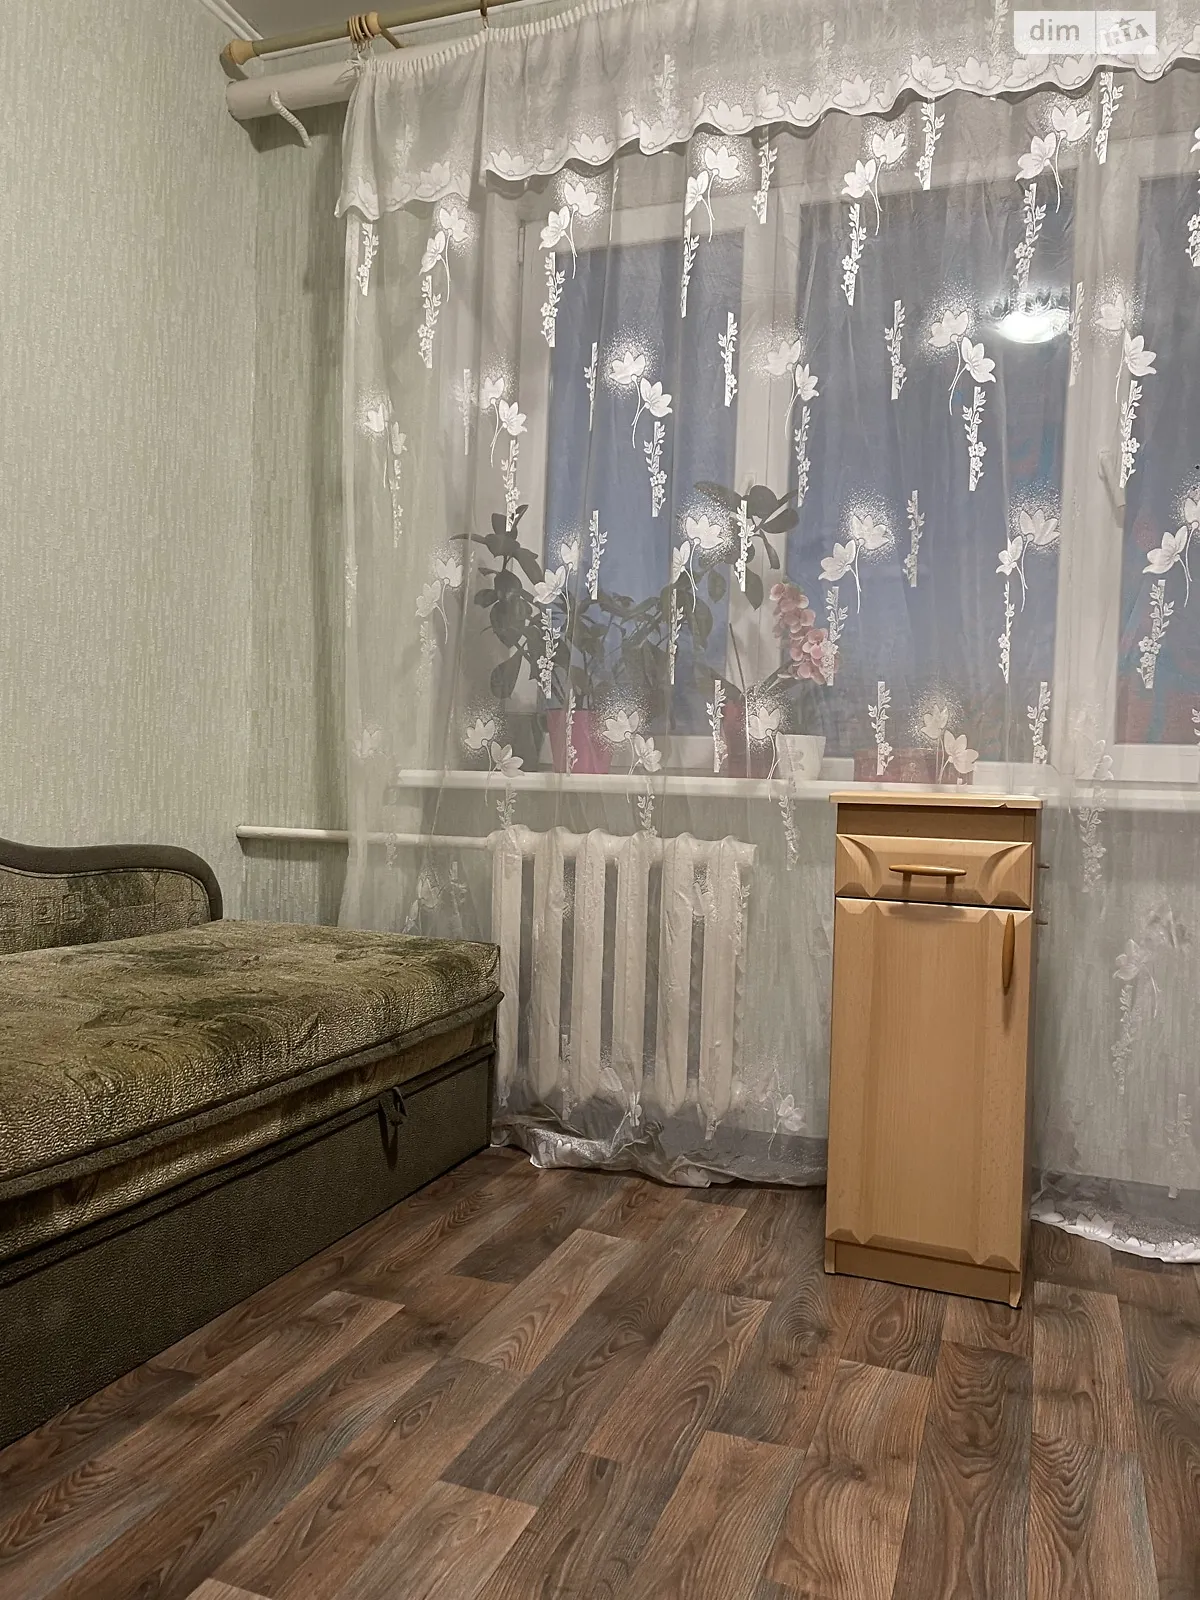 Продается комната 18 кв. м в Ровно - фото 4